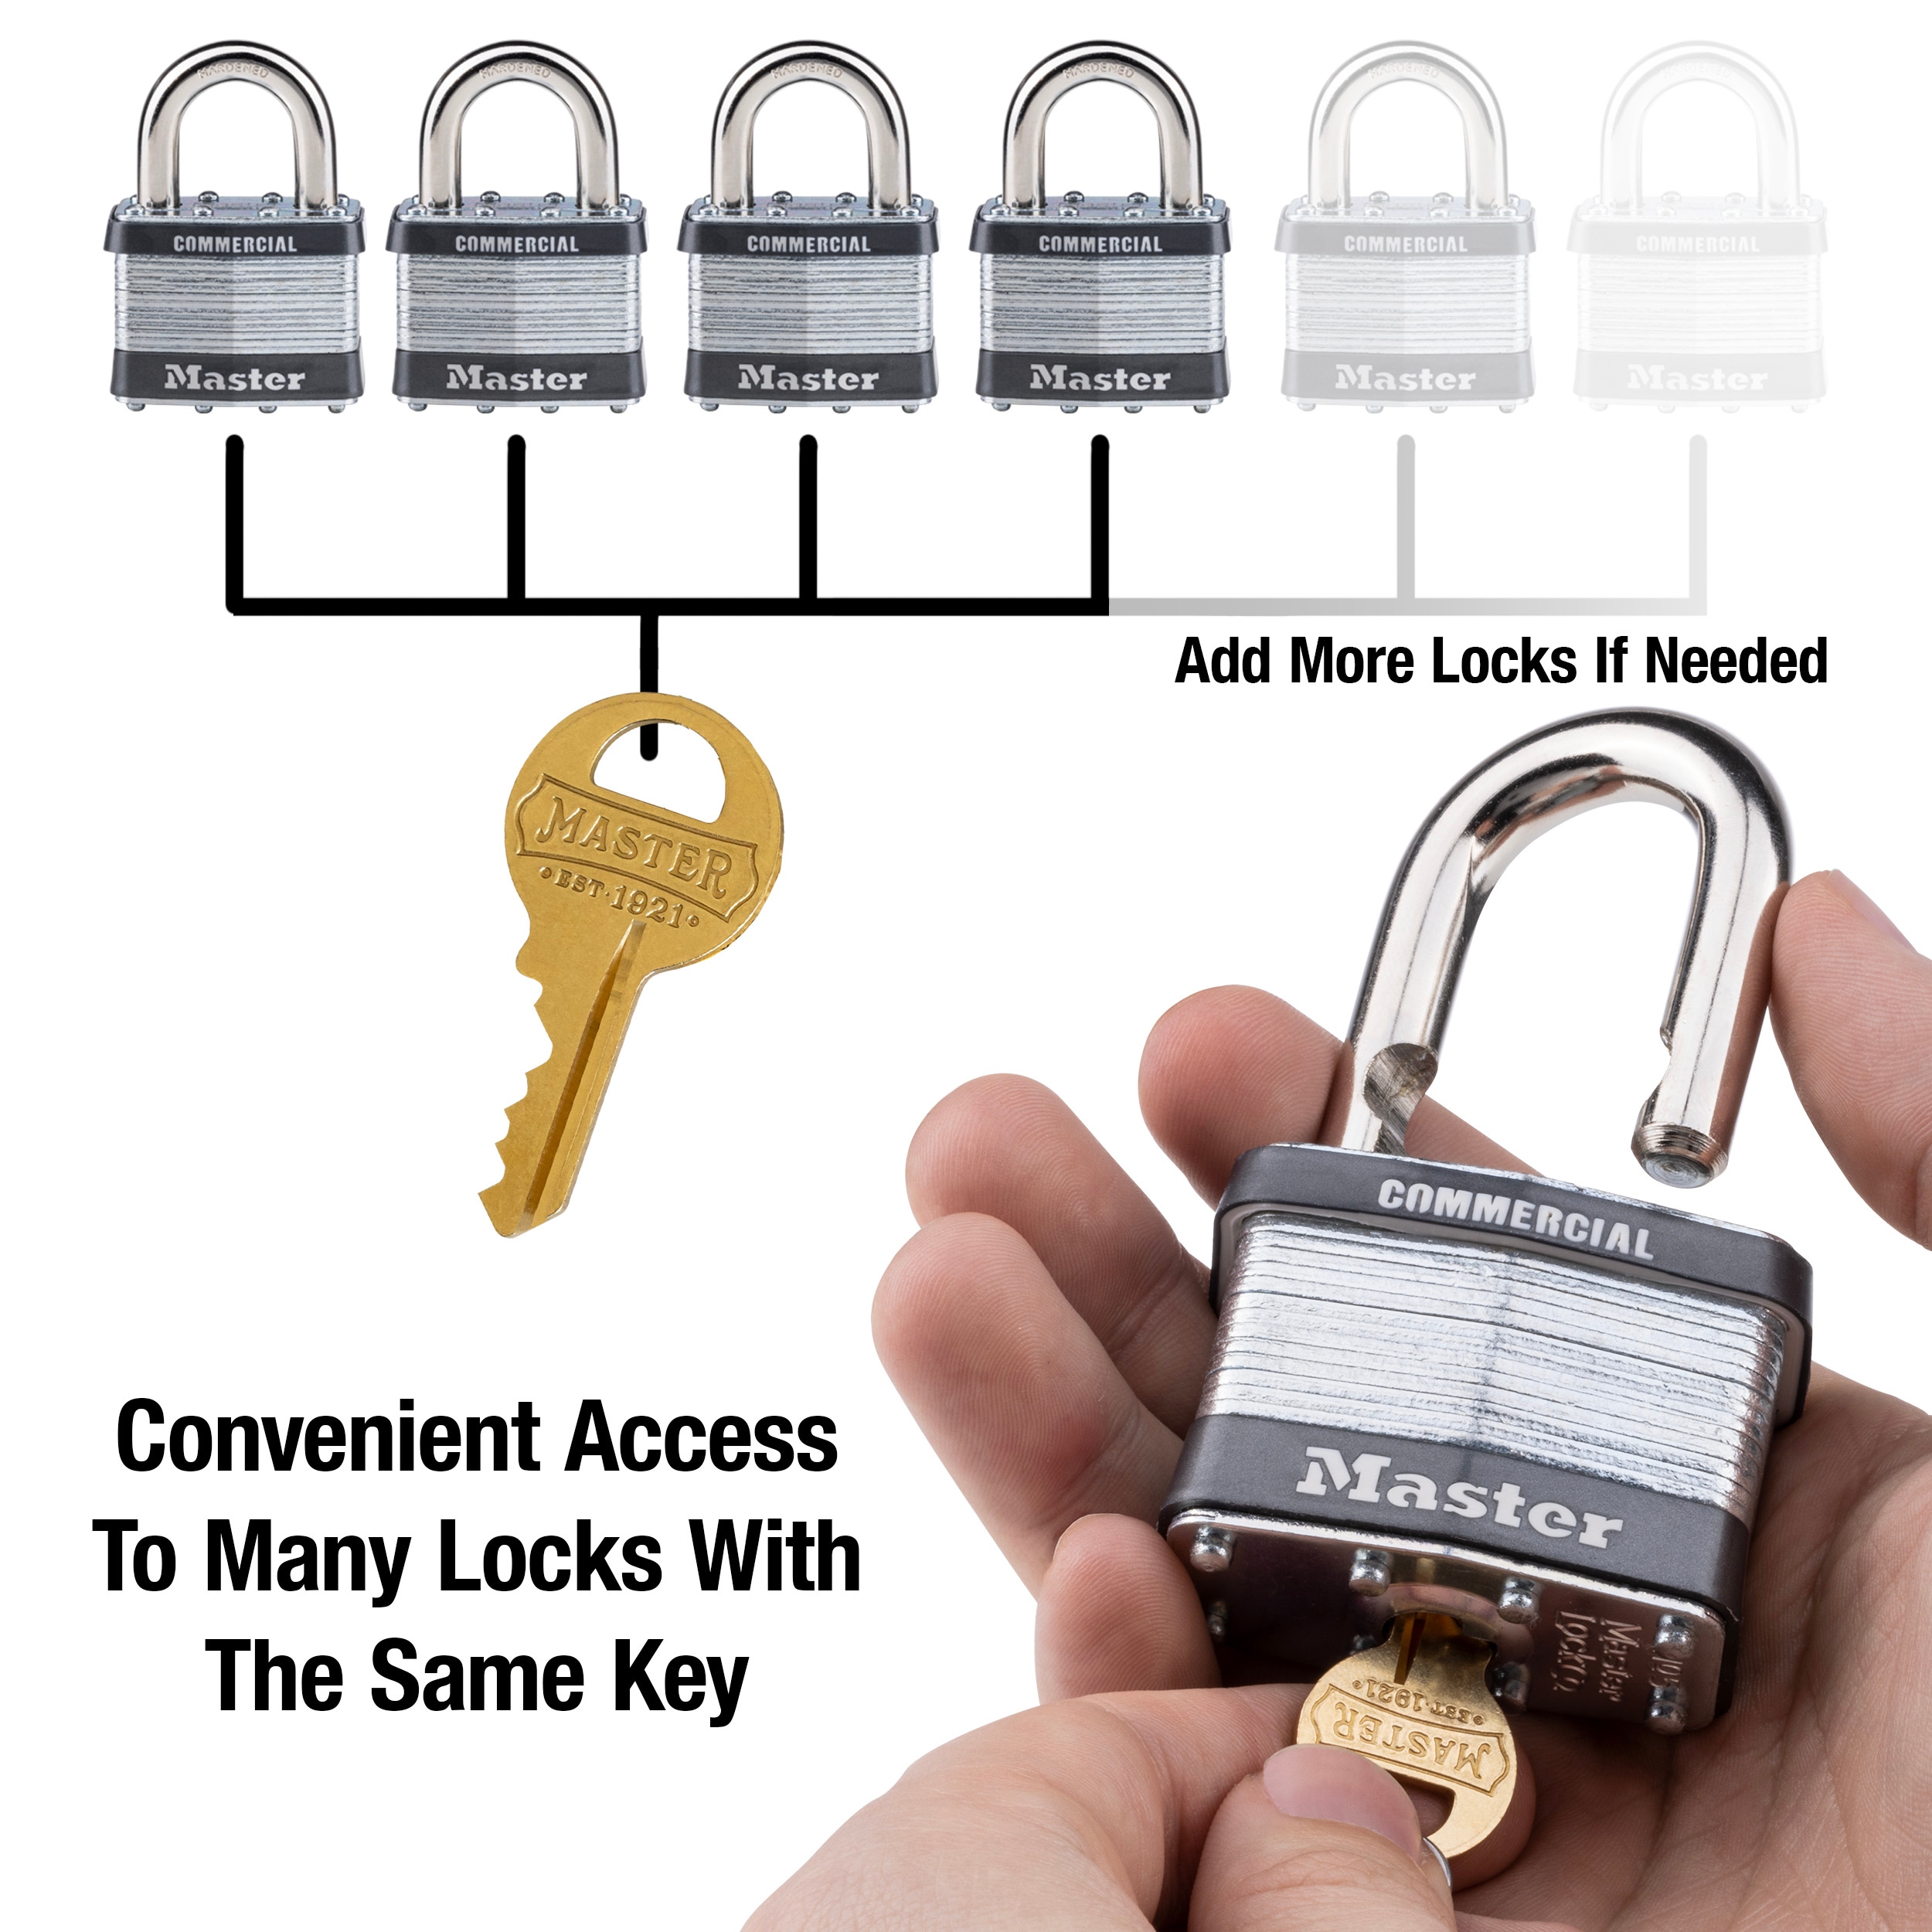 Master Lock Commercial Keyed Padlock 1-in Shackle Keyed Alike